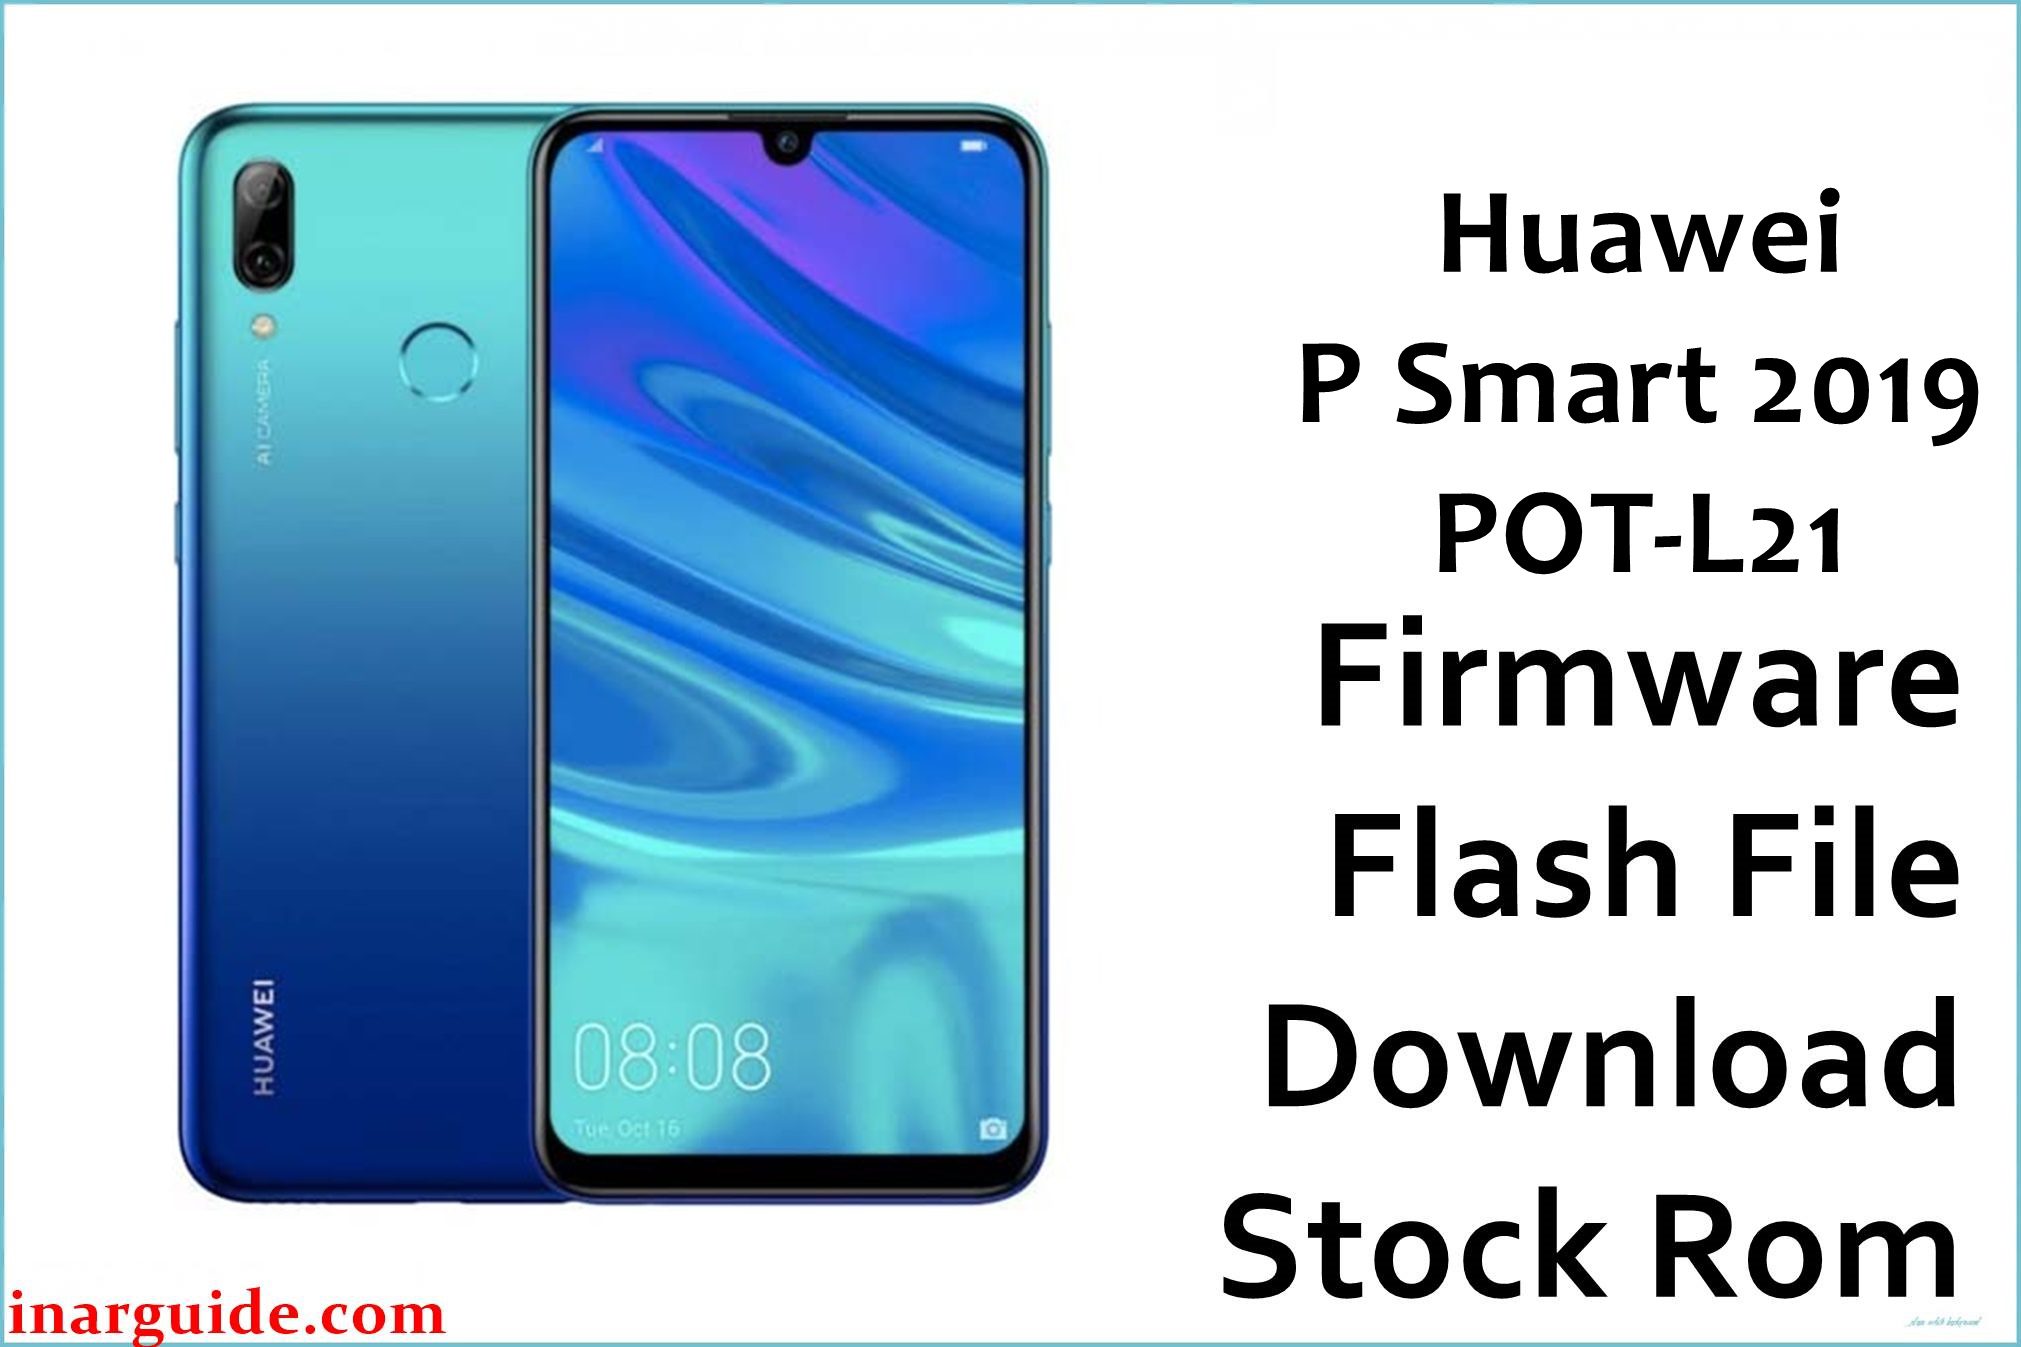 Huawei P Smart 2019 POT L21